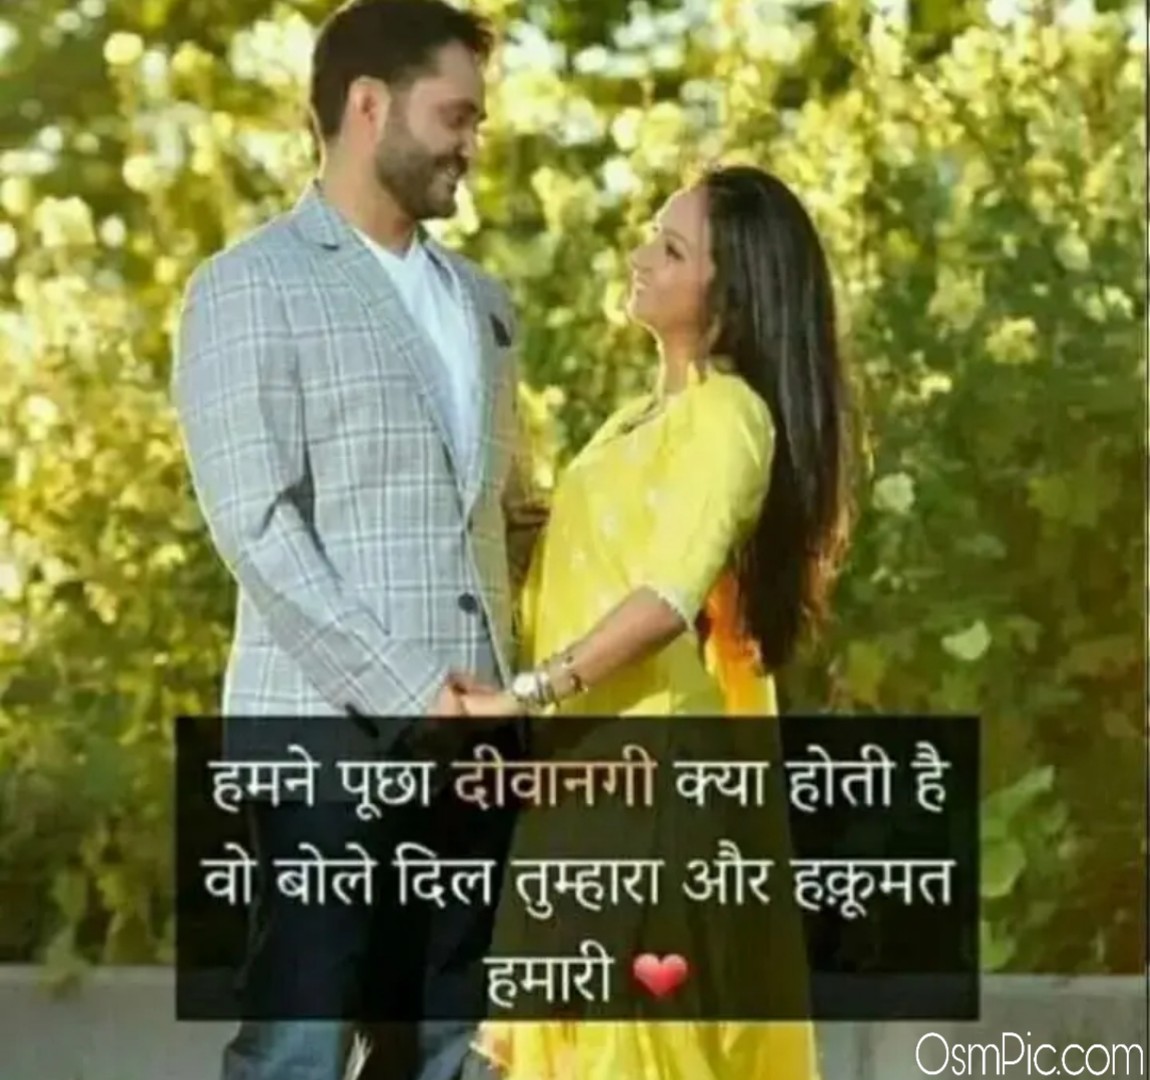 55 Beautiful Hindi Love Shayari Images For Whatsapp Dp Shayari Status